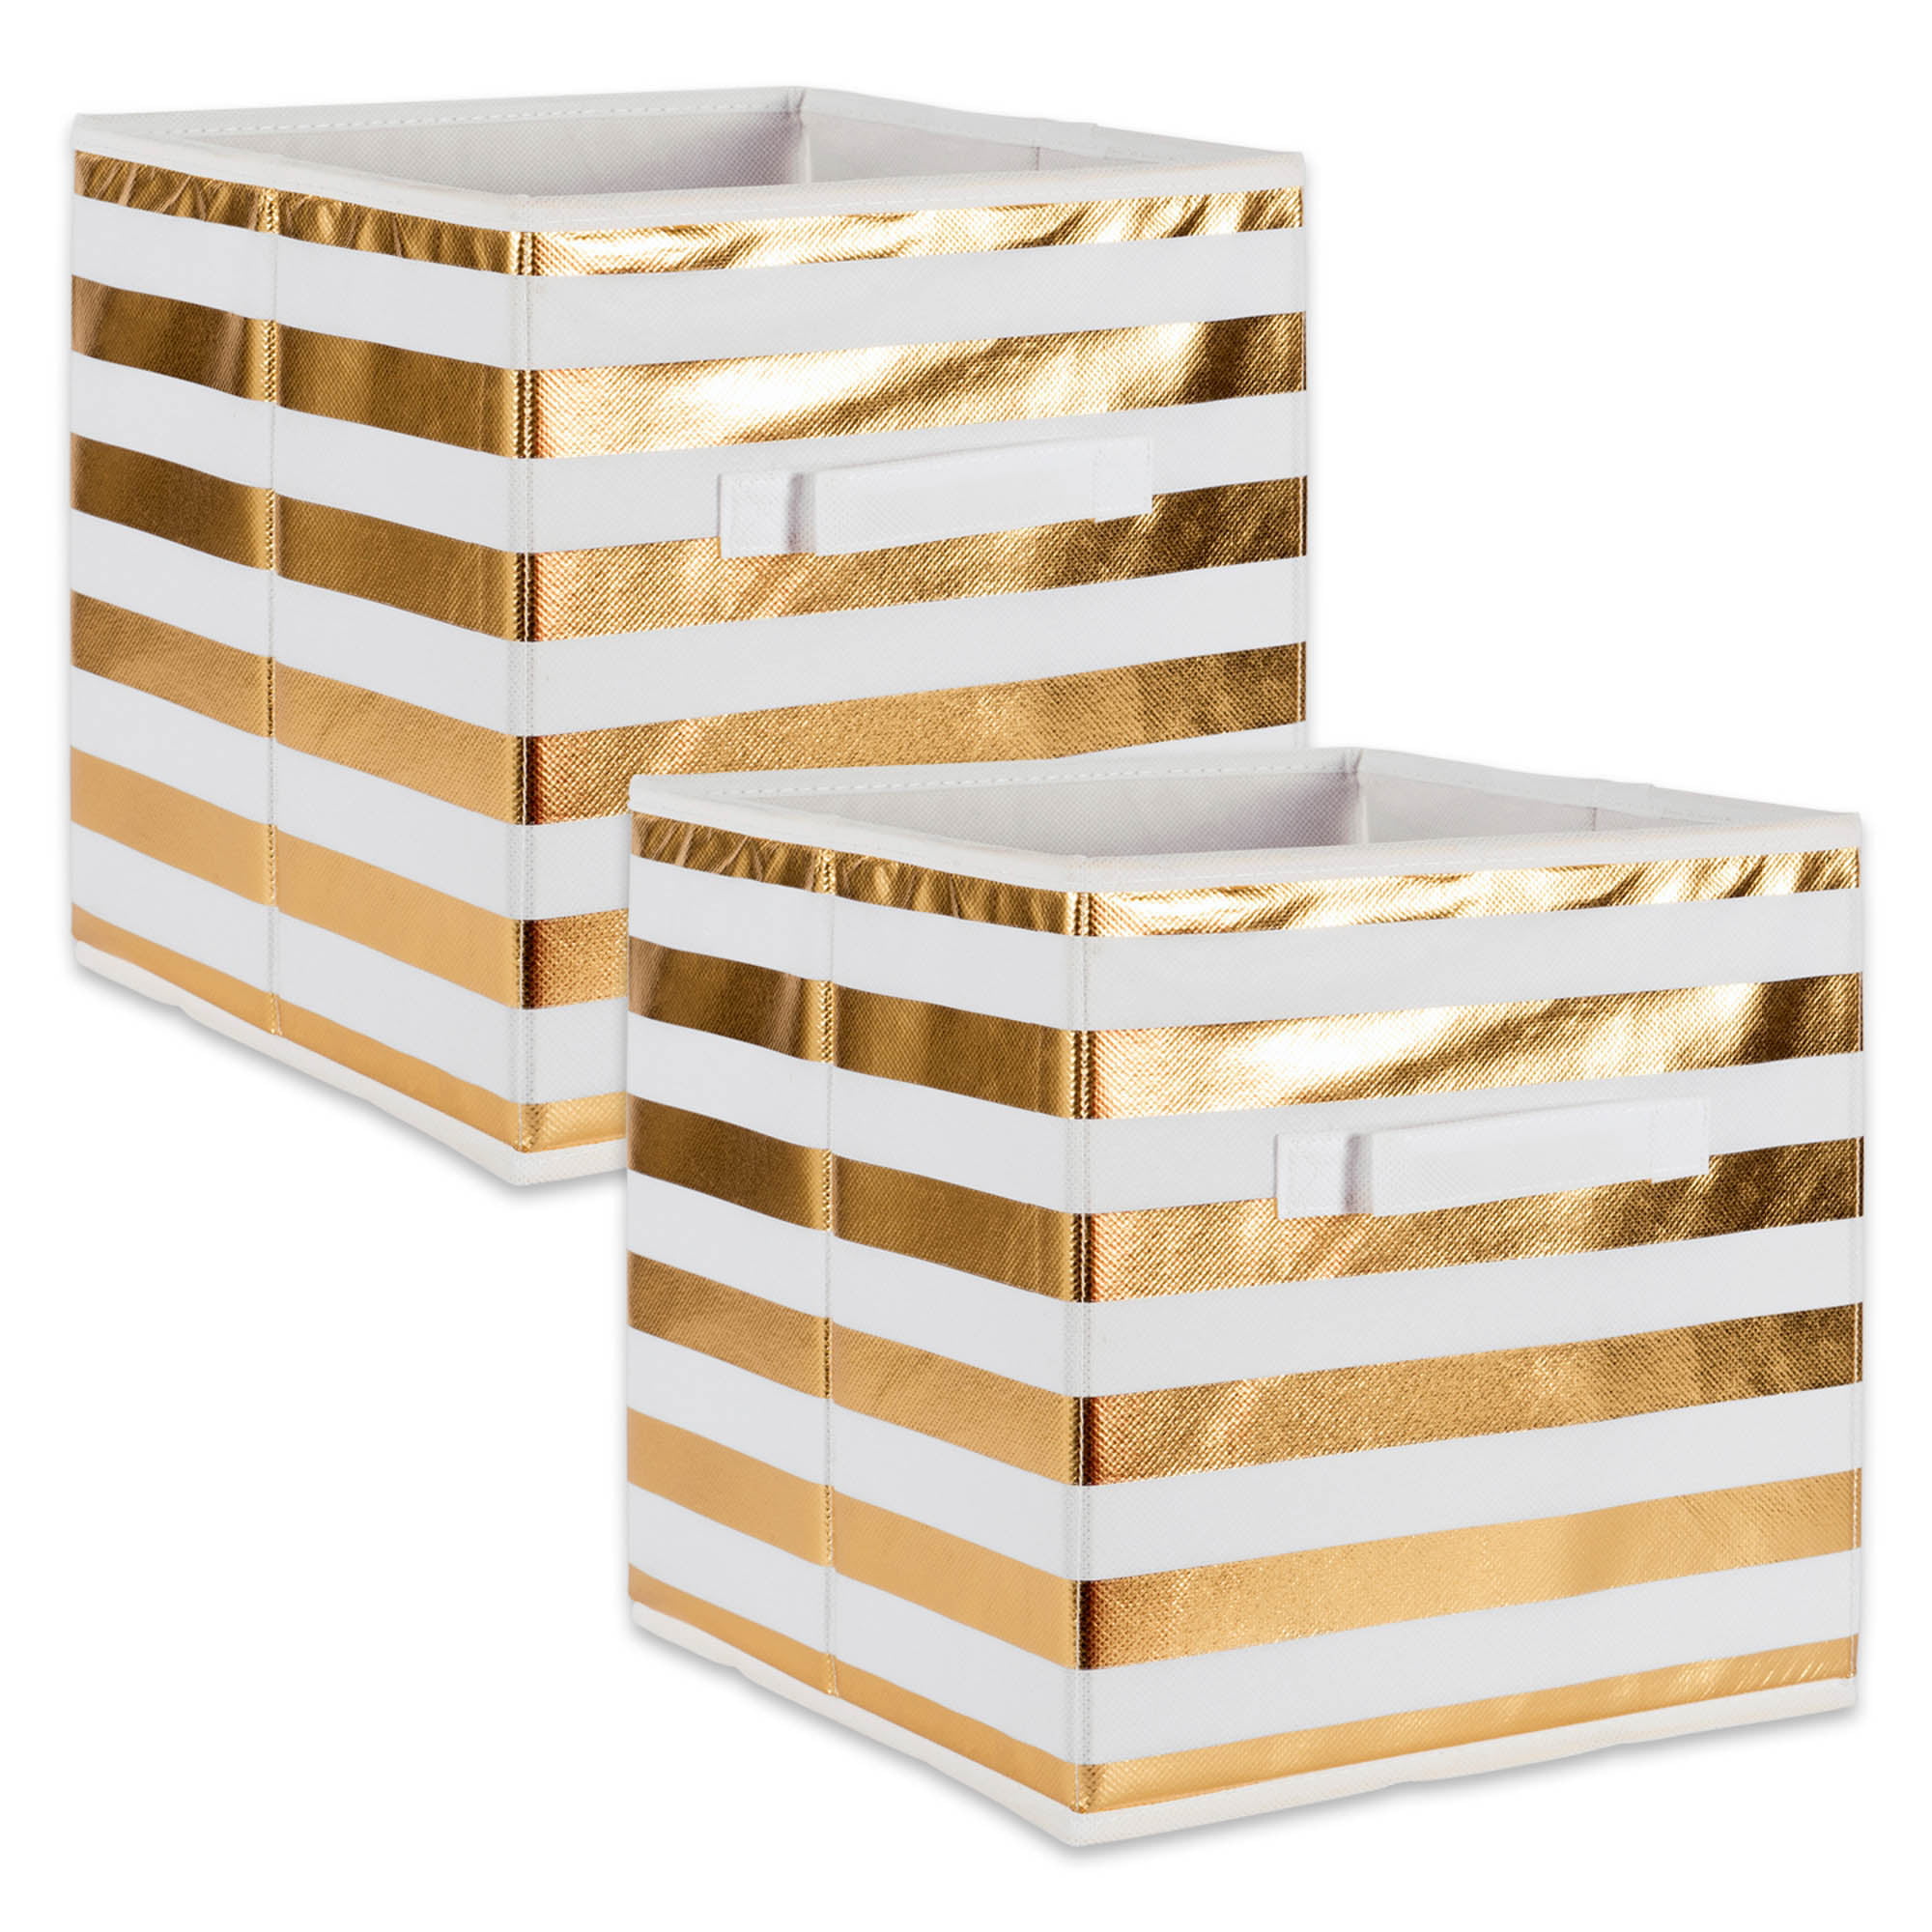 Details about   Foldable Collapsible Storage Cube Basket Bin Box Organizer Fabric Fold Flat 